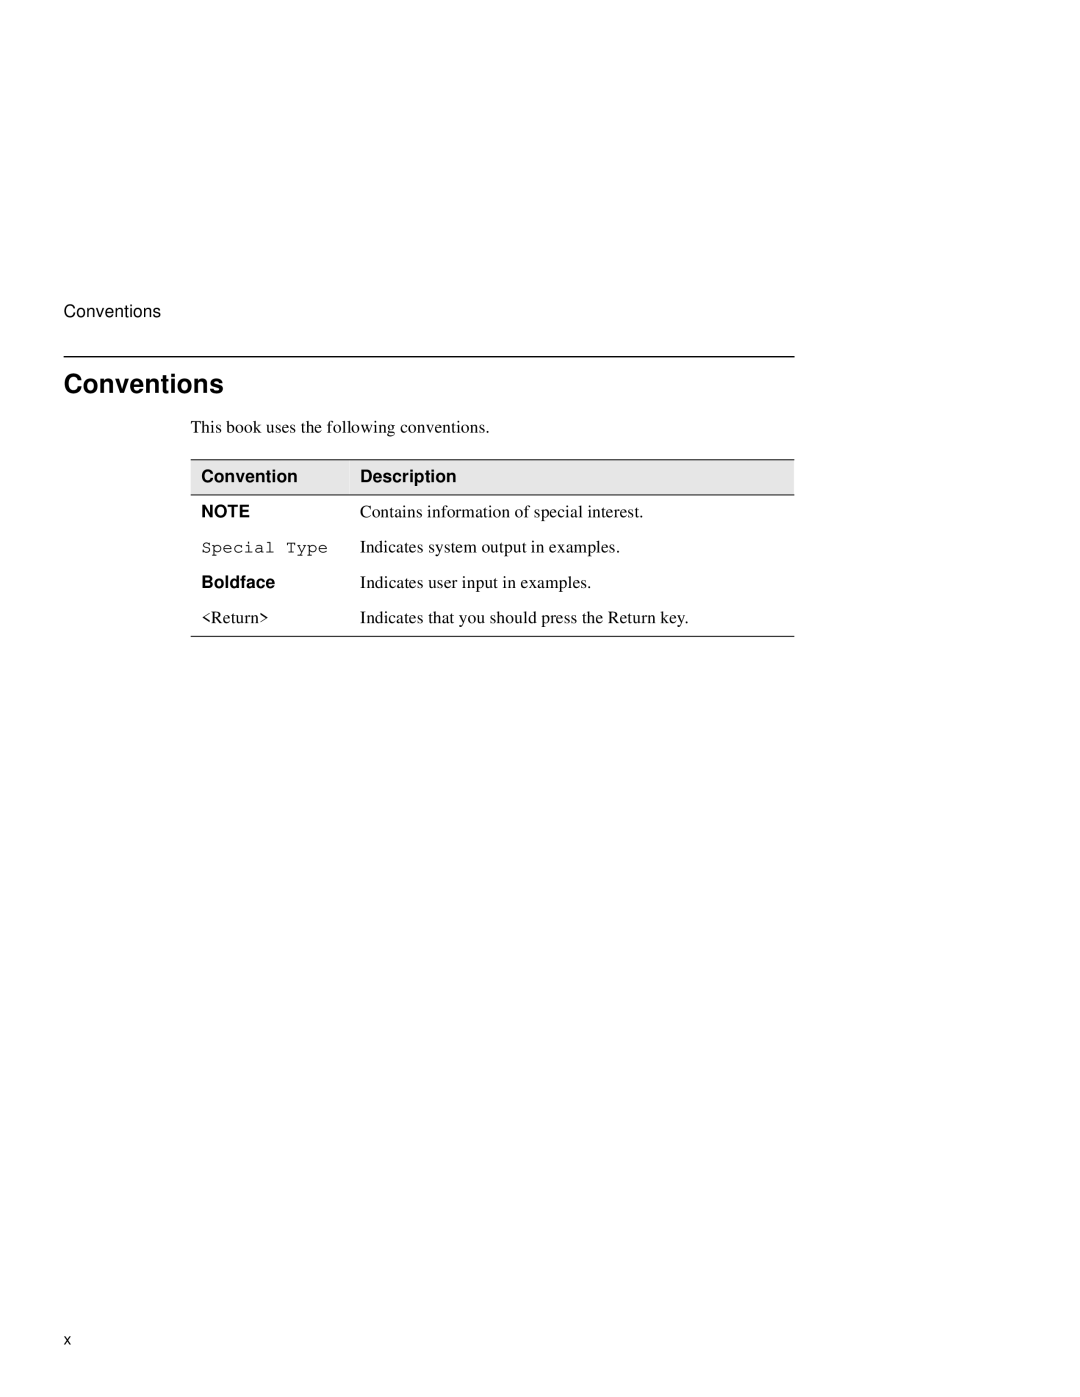 Network Technologies 900GV manual Conventions, Convention Description, Boldface 